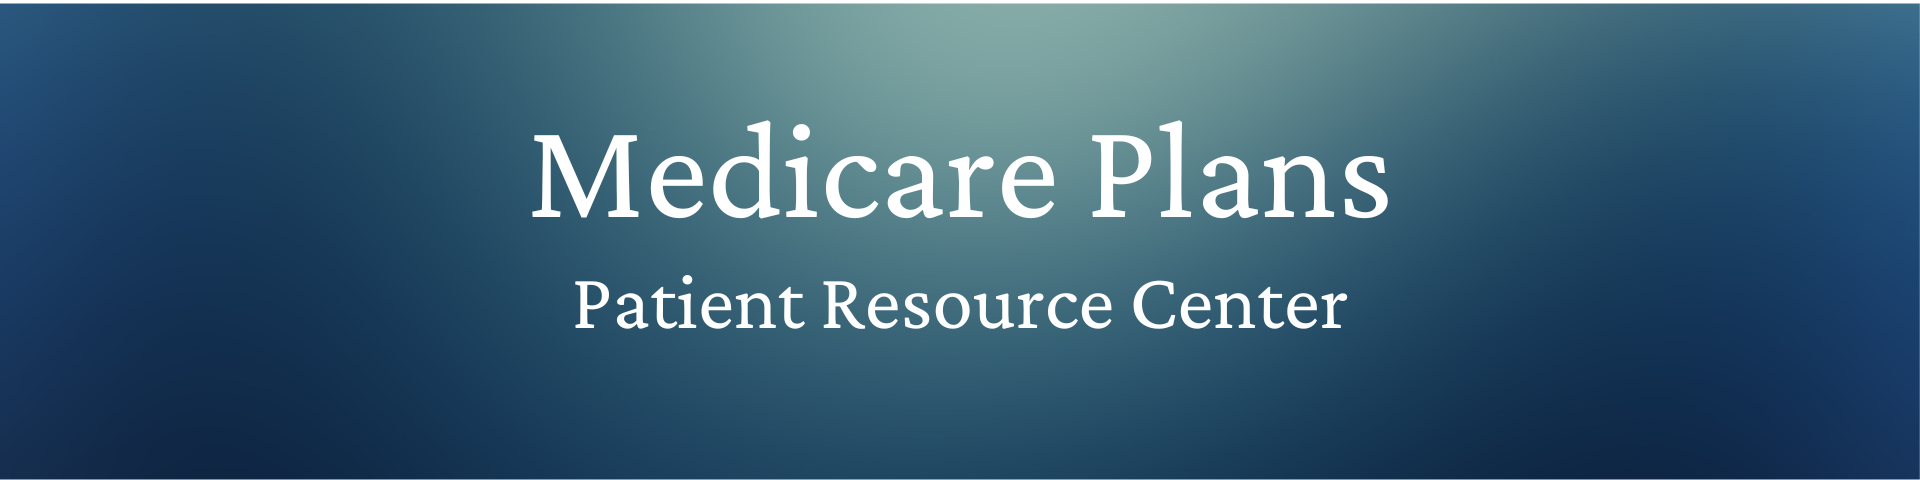 Medicare Plans Patient Resource Center (link)